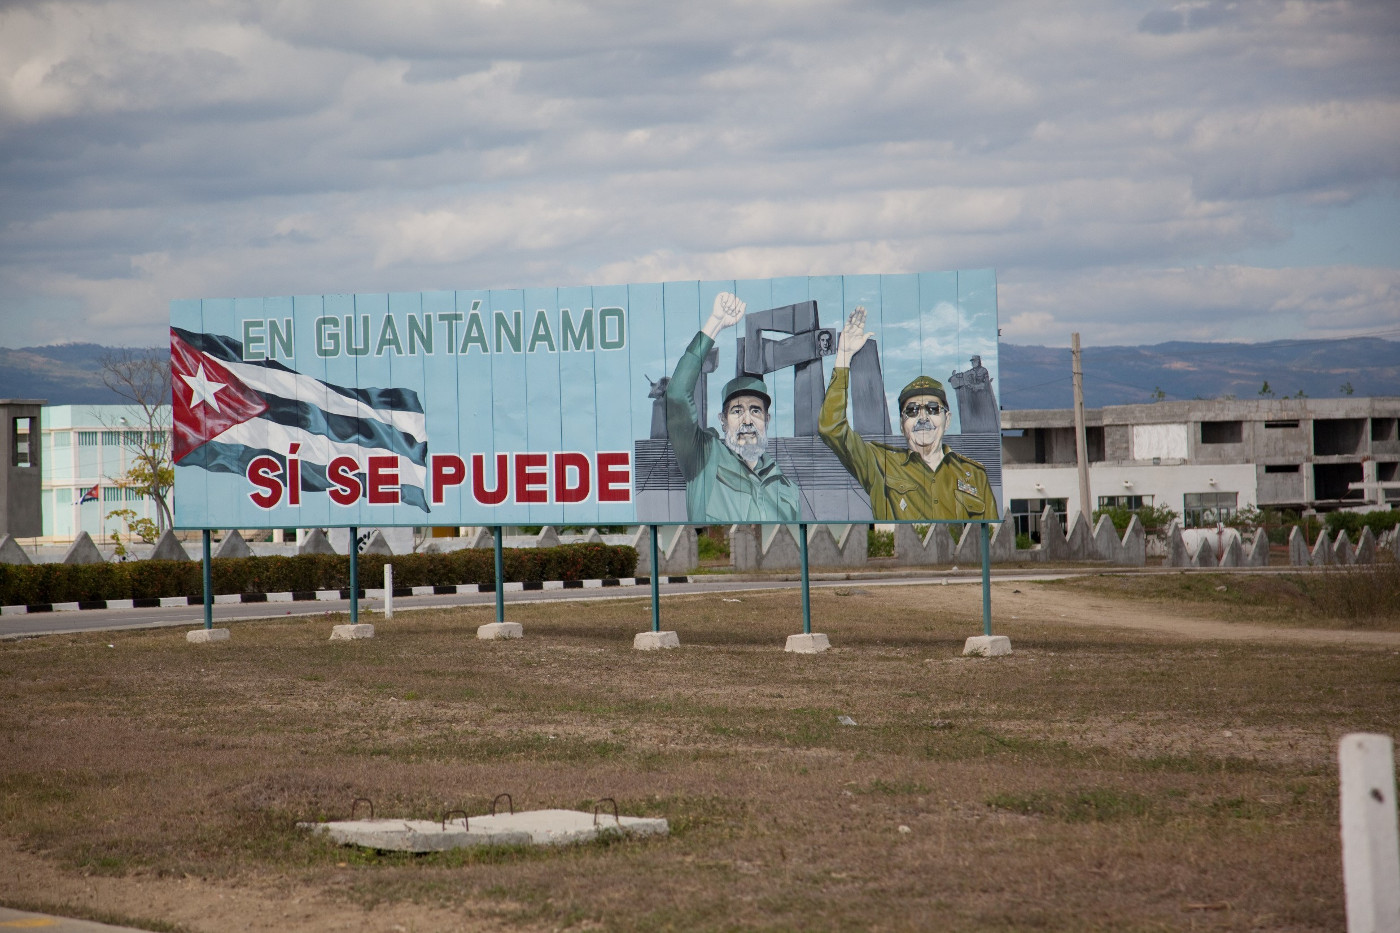 Straße in Guantánamo, Kuba. Symbolfoto (2012): Adveniat/Martin Steffen